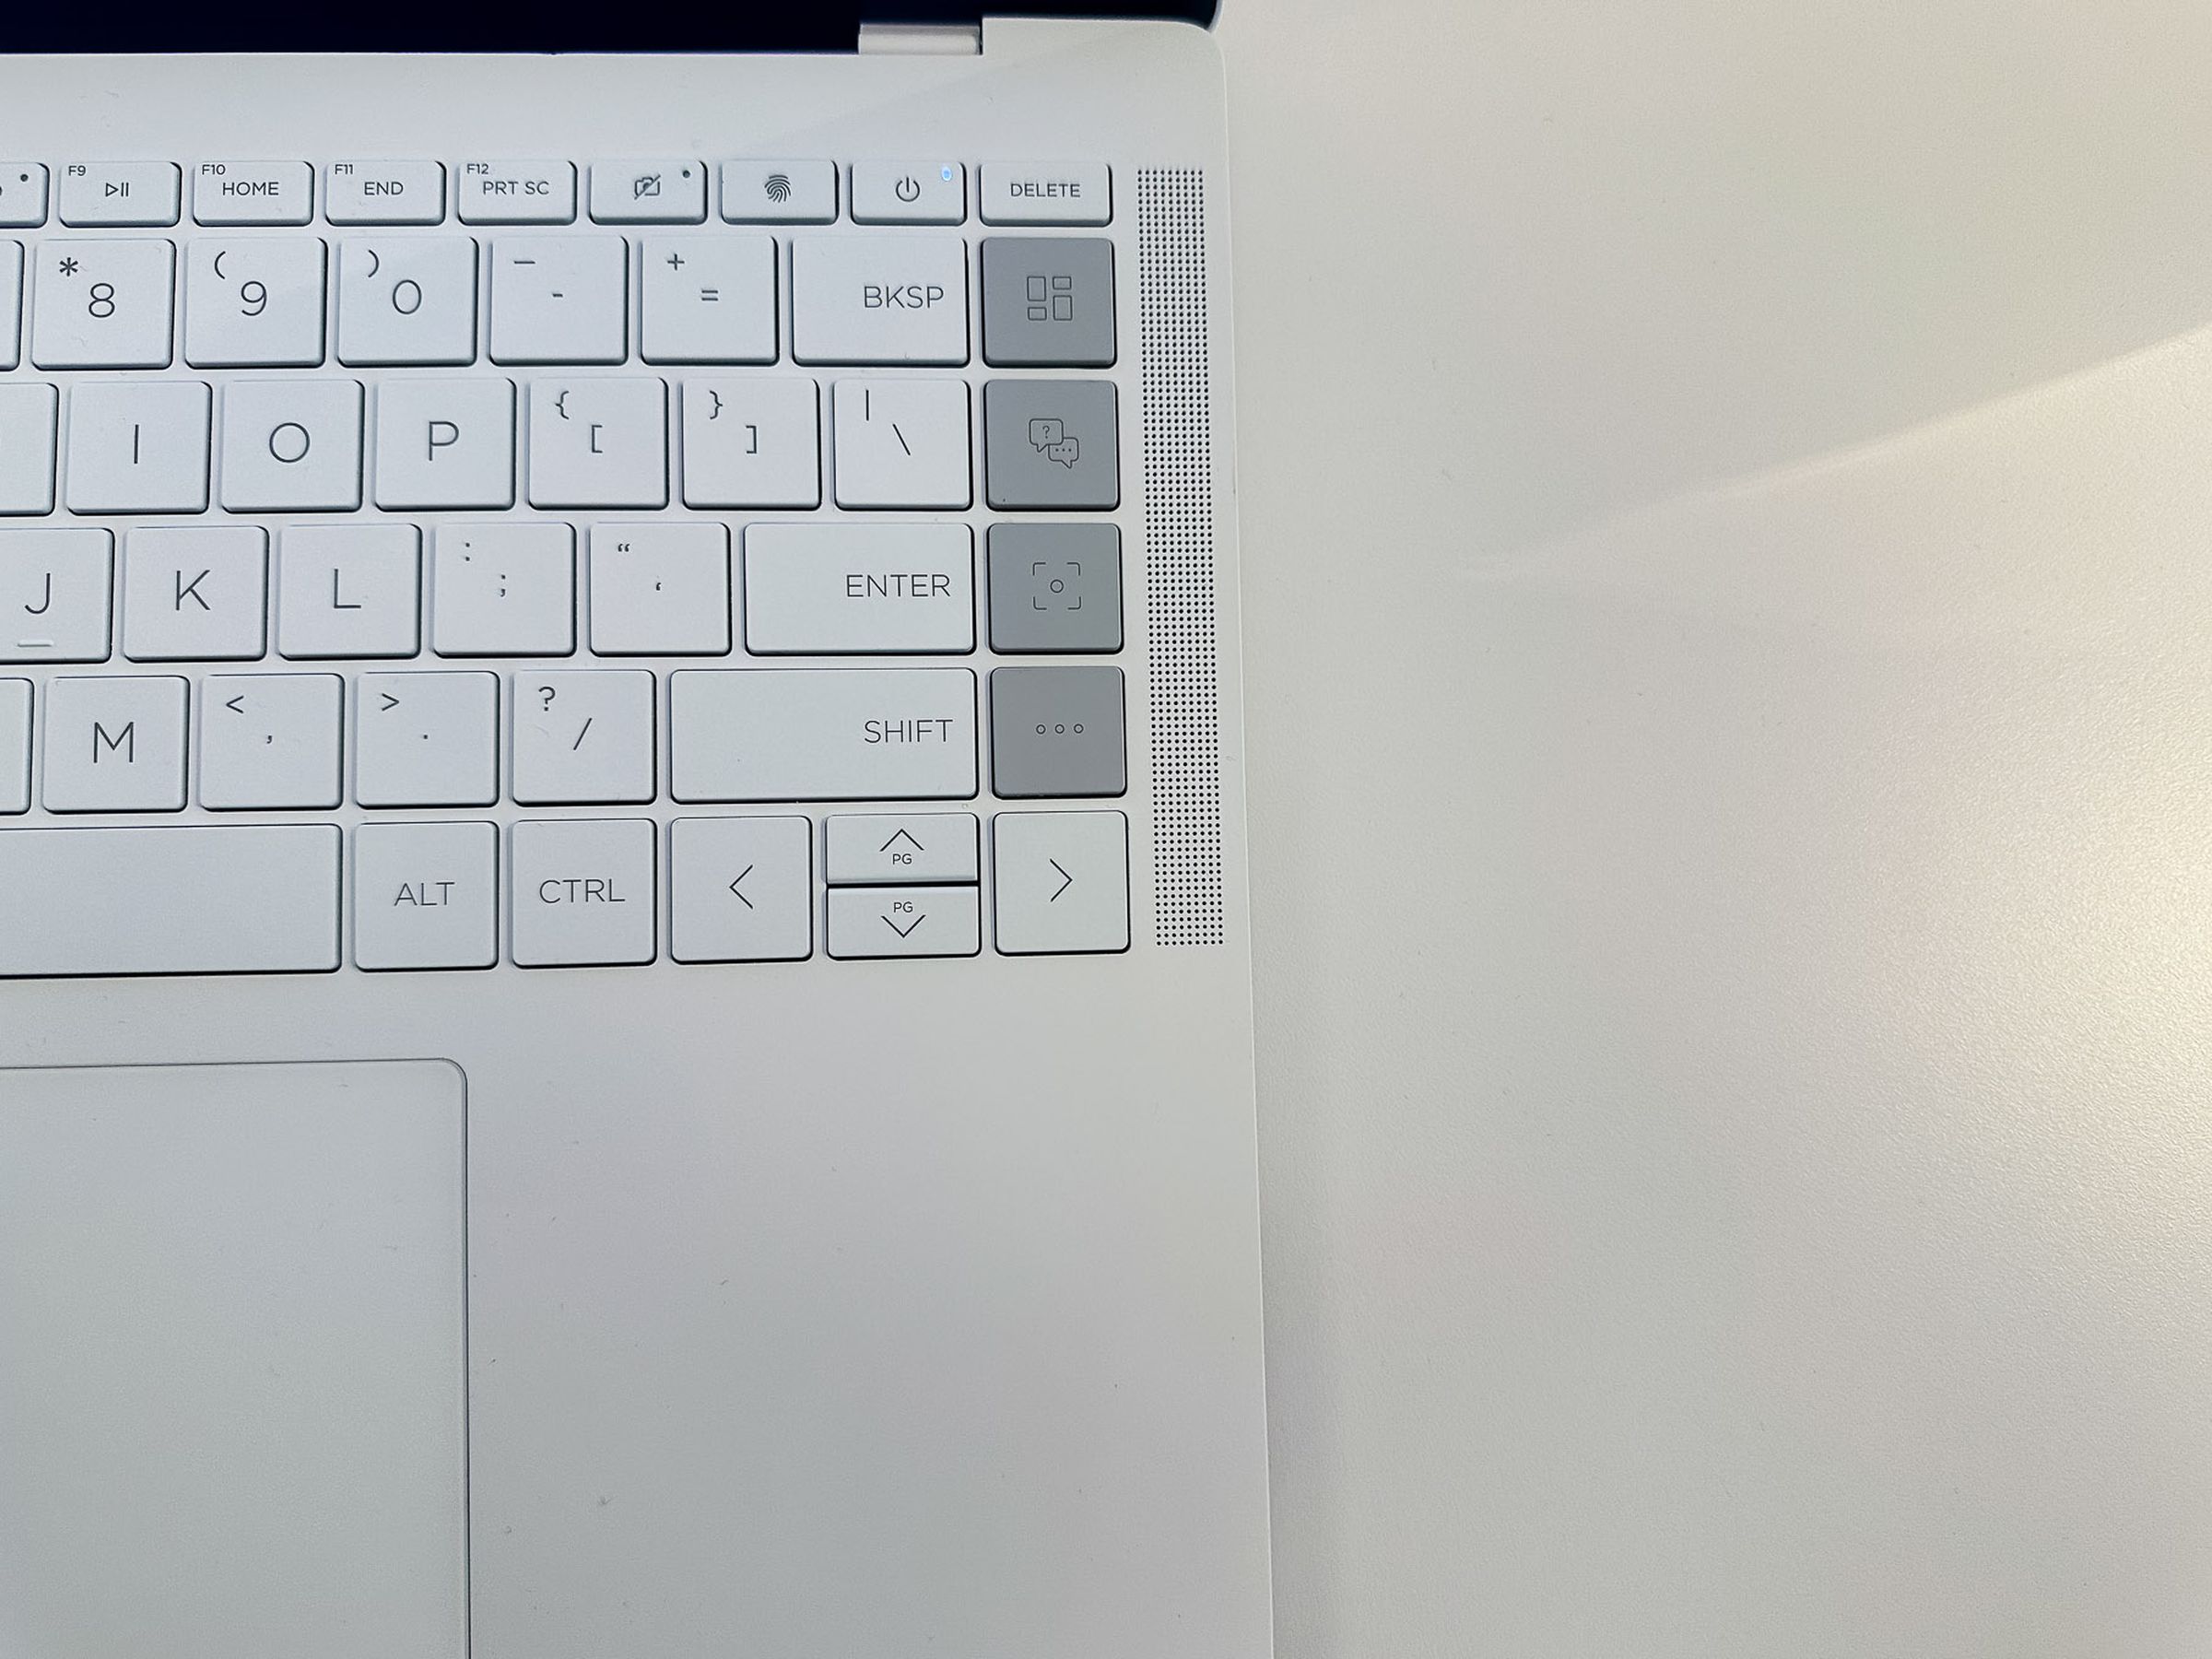 Shortcut keys on the HP Dragonfly Pro keyboard.